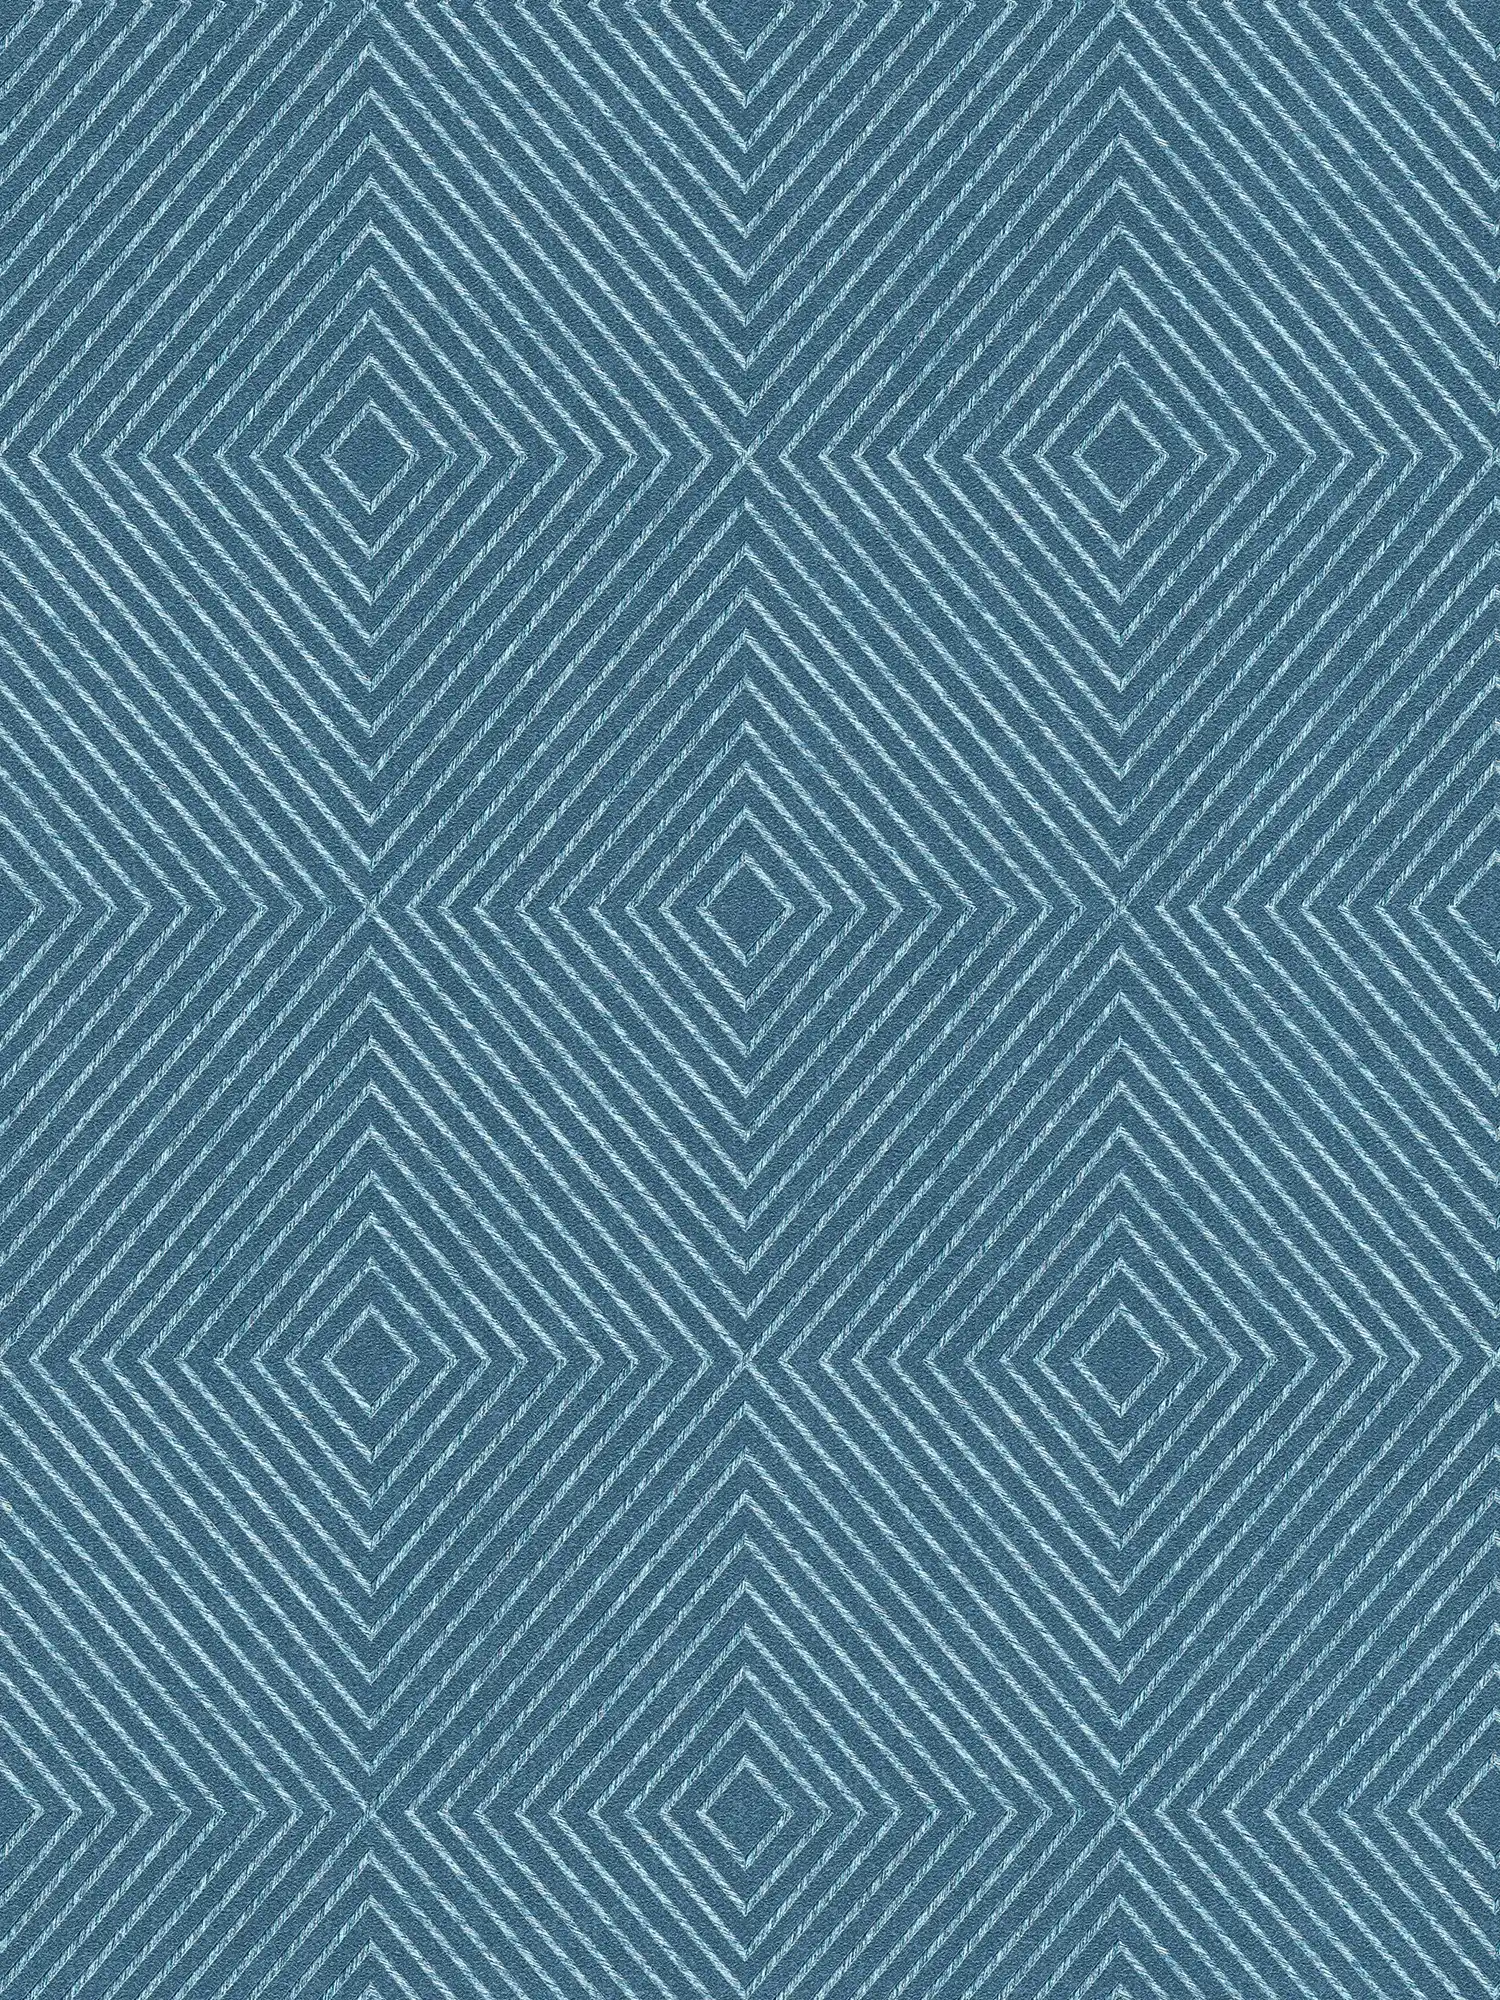 Tapete Grafik-Design, Scandinavian Style – Blau, Silber
